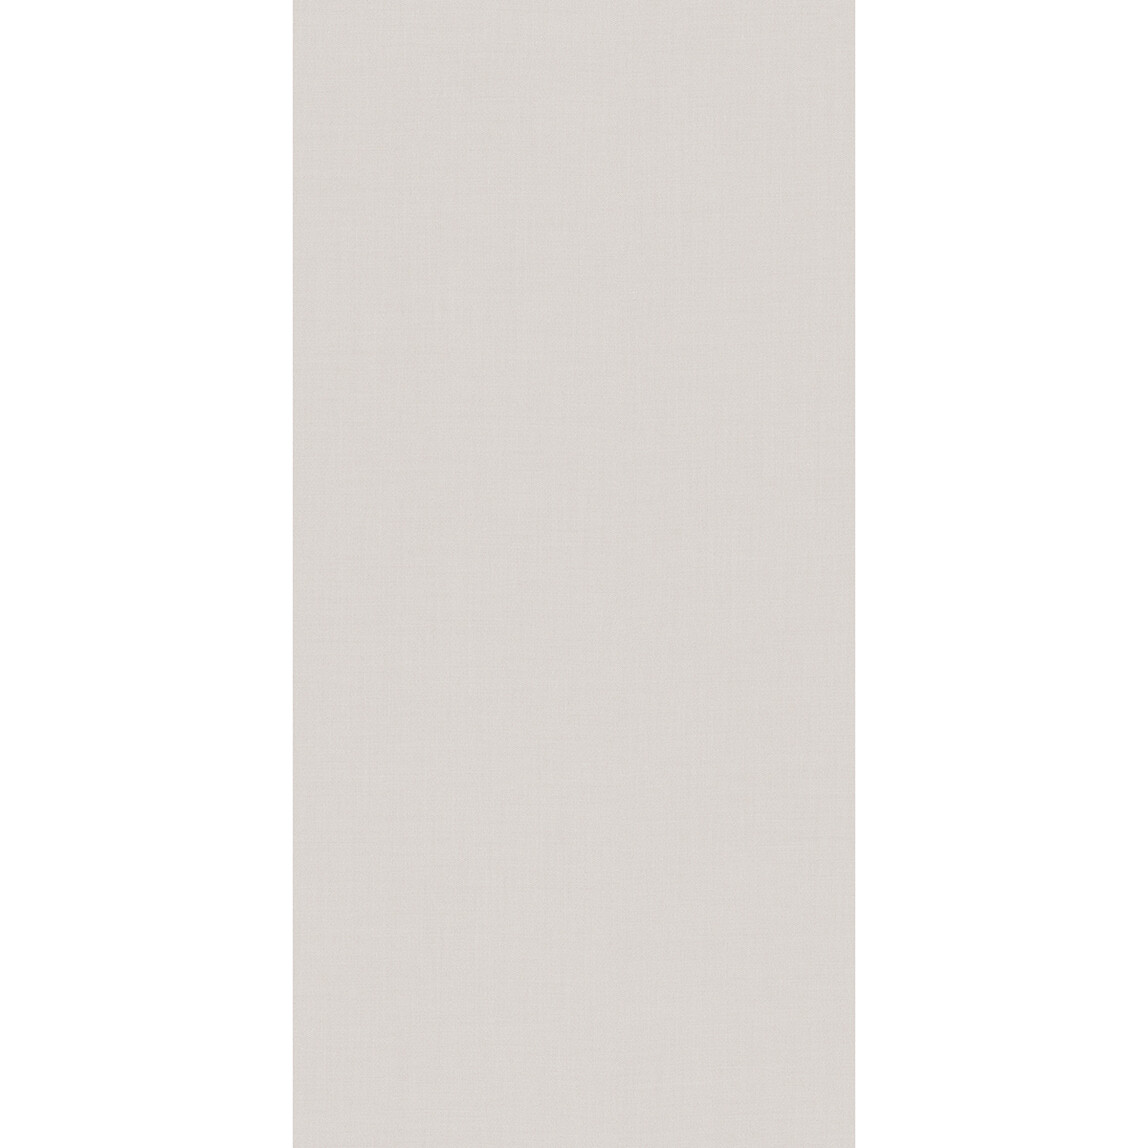    Orma Paris Bej Yonga Levha 1,8x210x280 cm 5,88 m2 